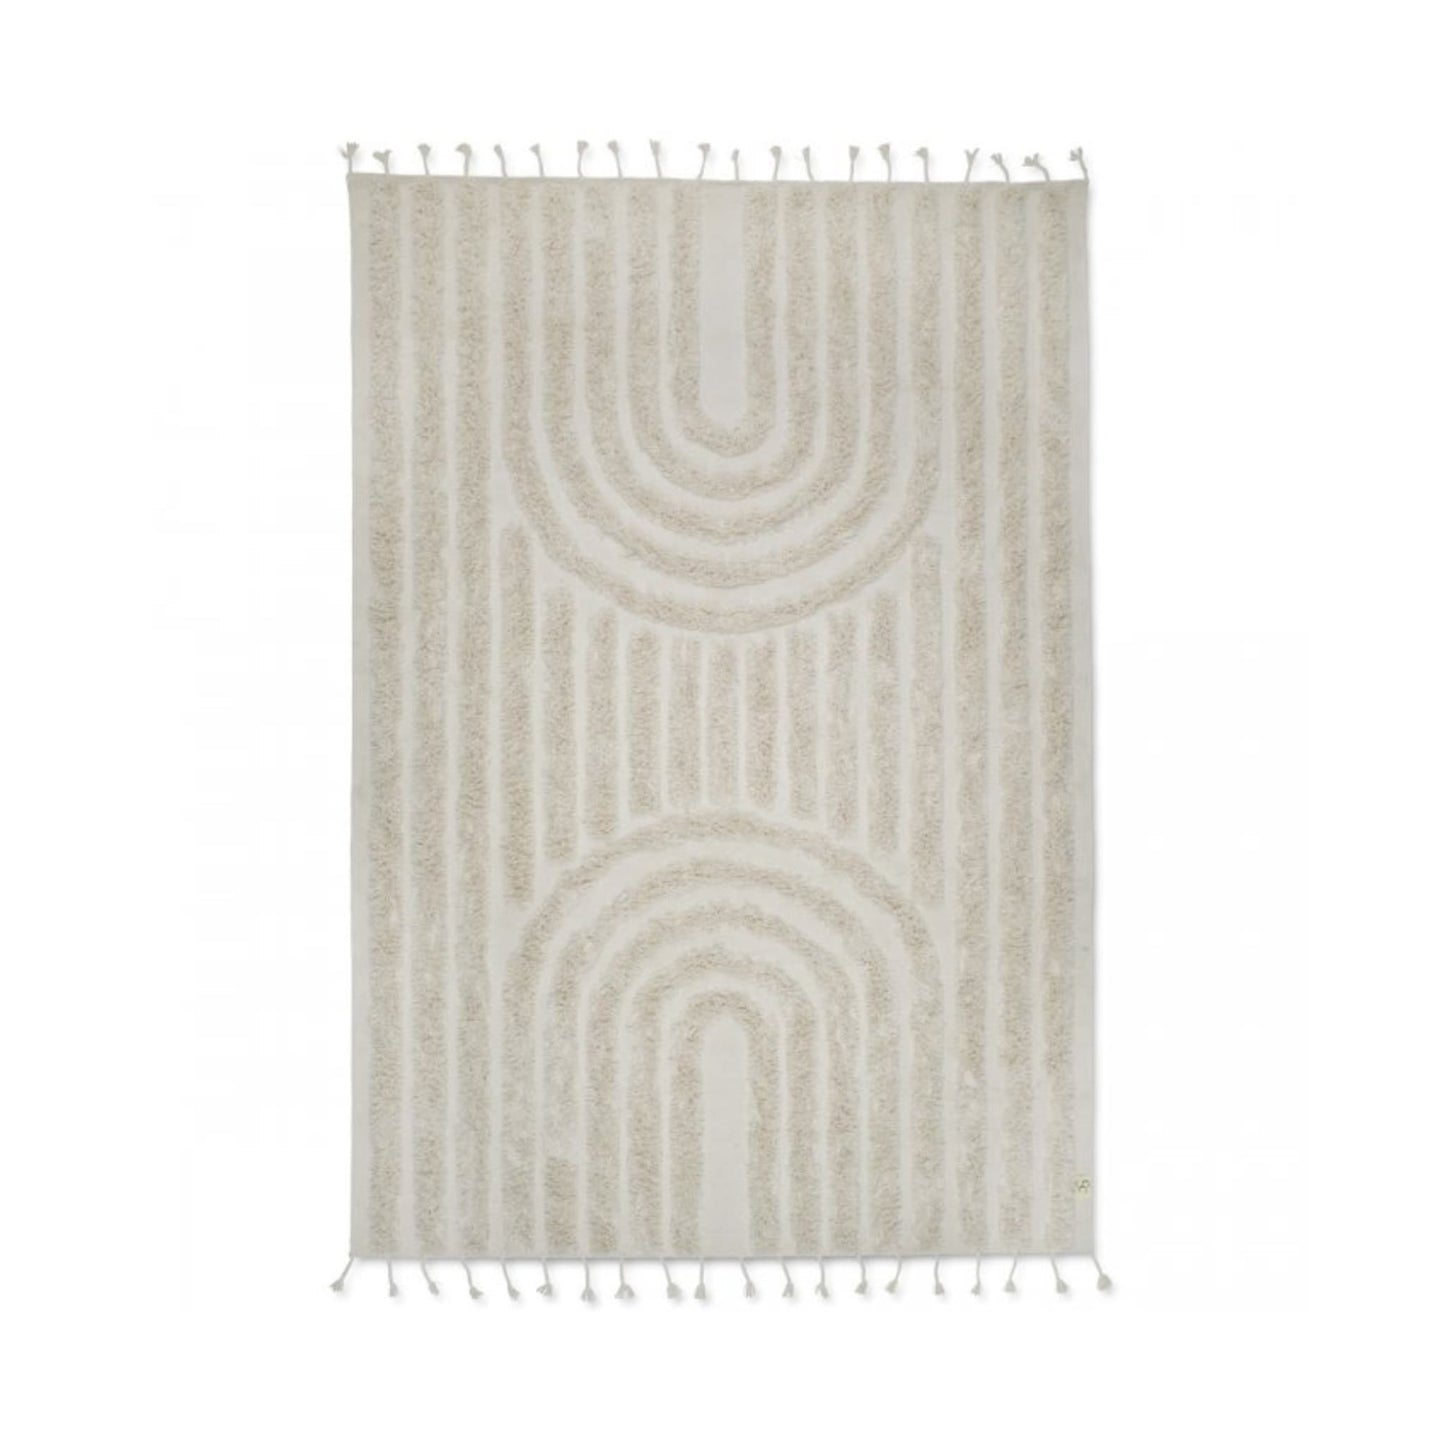 Arch rug white